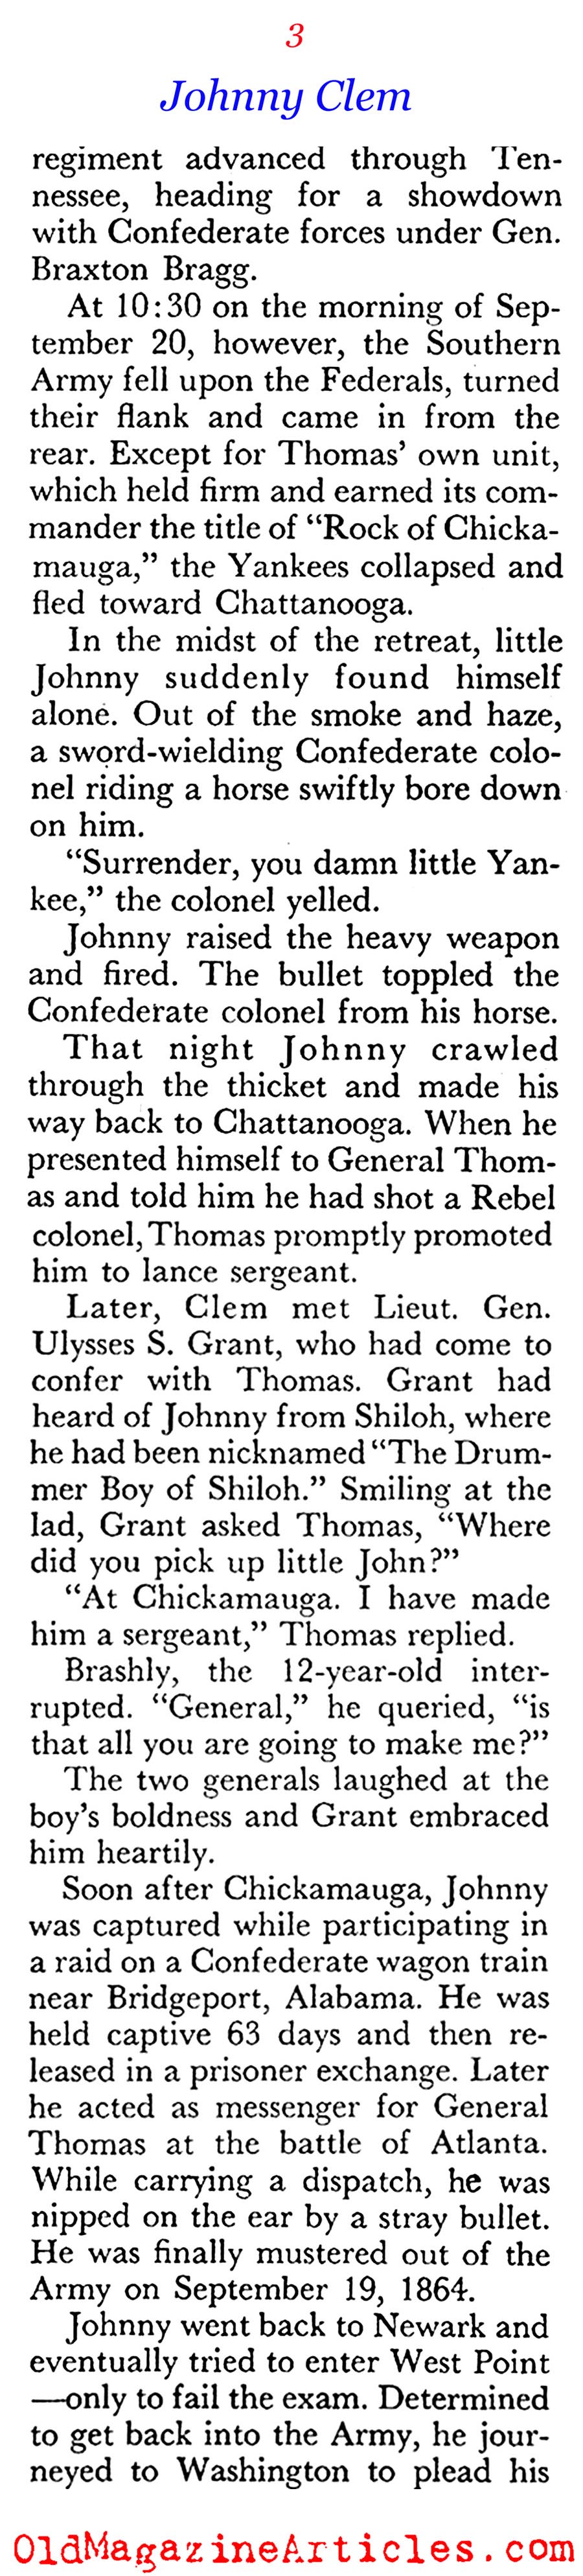 A Boy in the Union Army (Coronet Magazine, 1960)